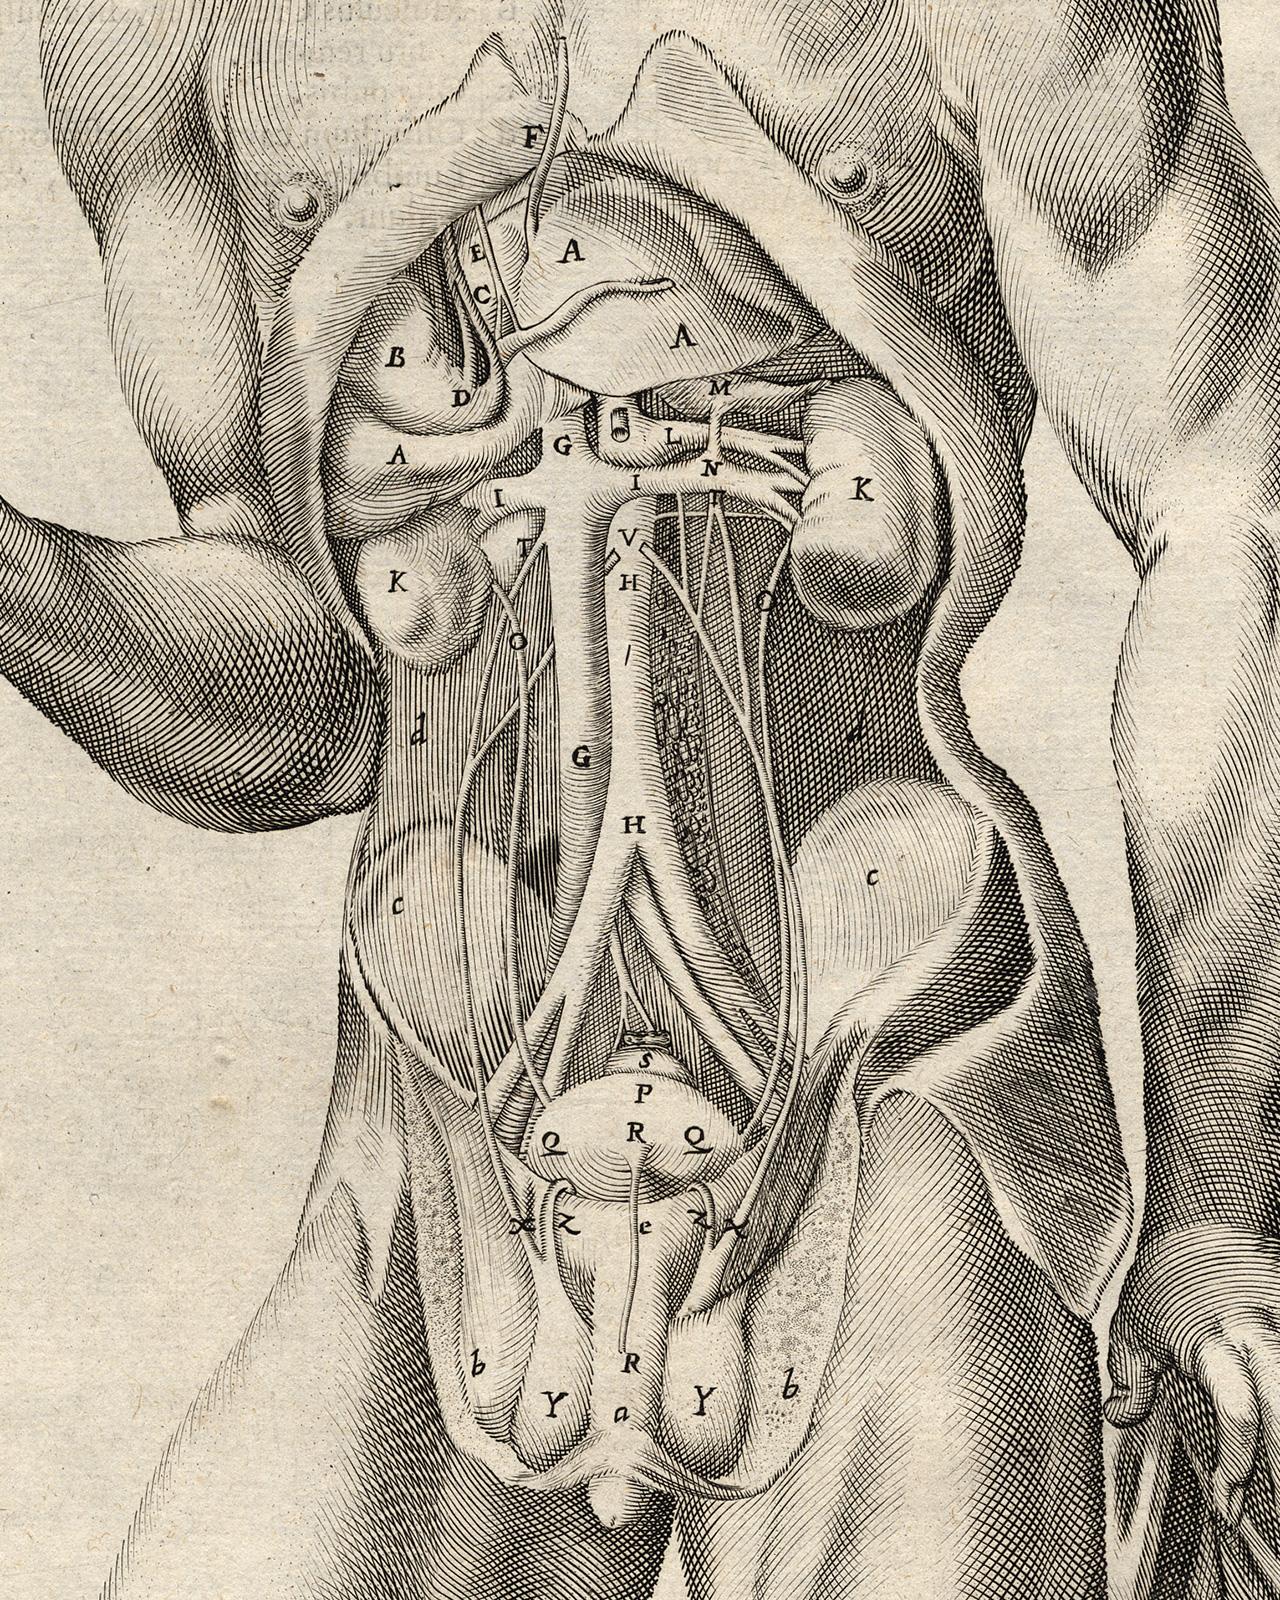 2 anatomical prints - Male organs by Spigelius - Engraving - 17th century - Old Masters Print by Adrianus Spigelius